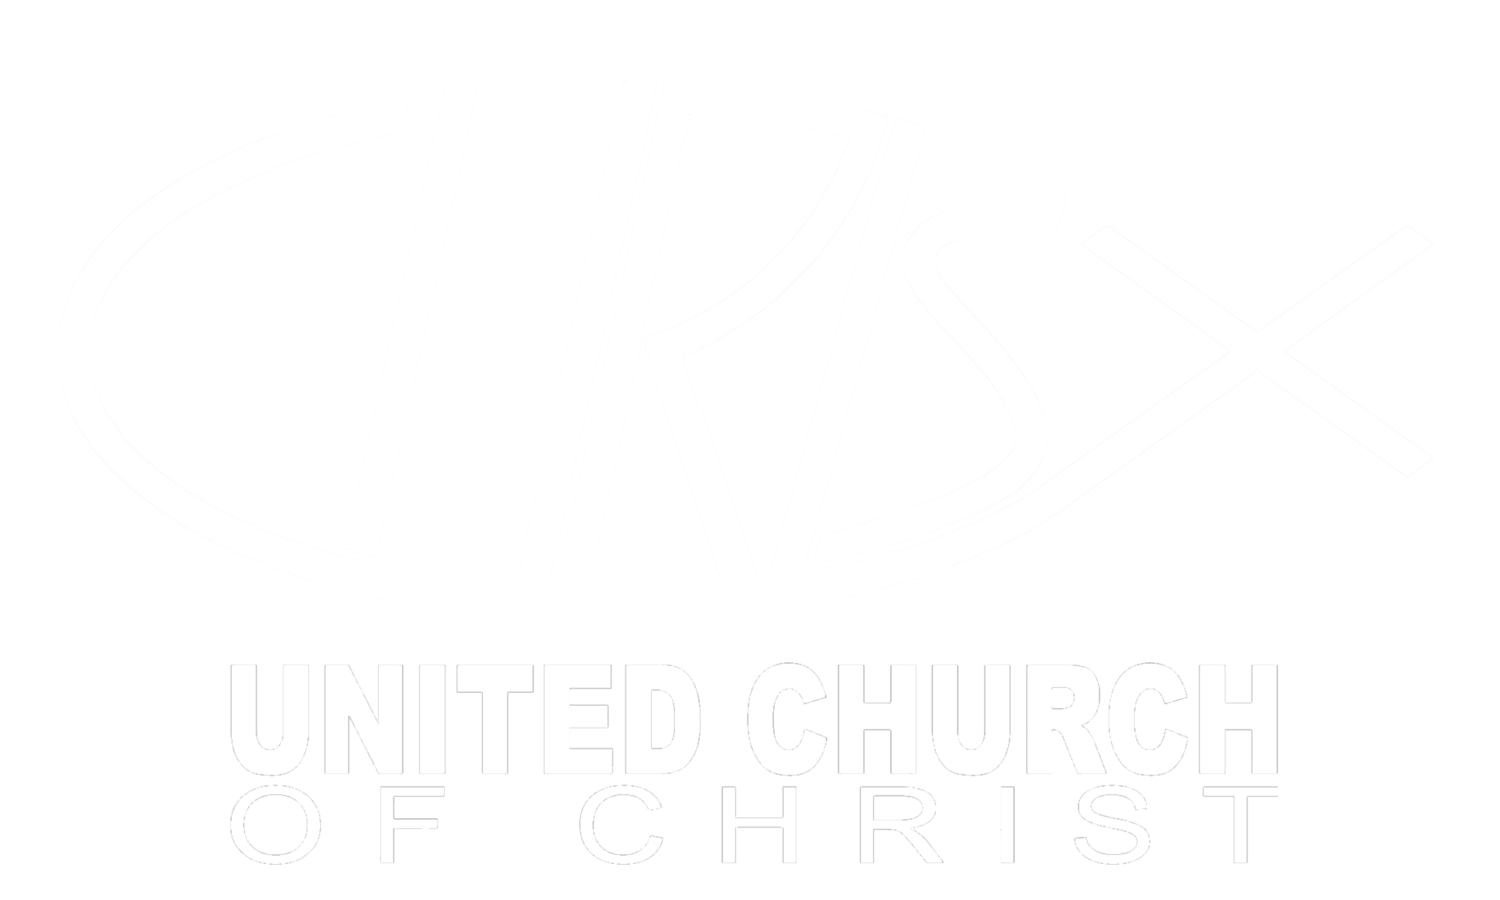 Christ United Church of Christ